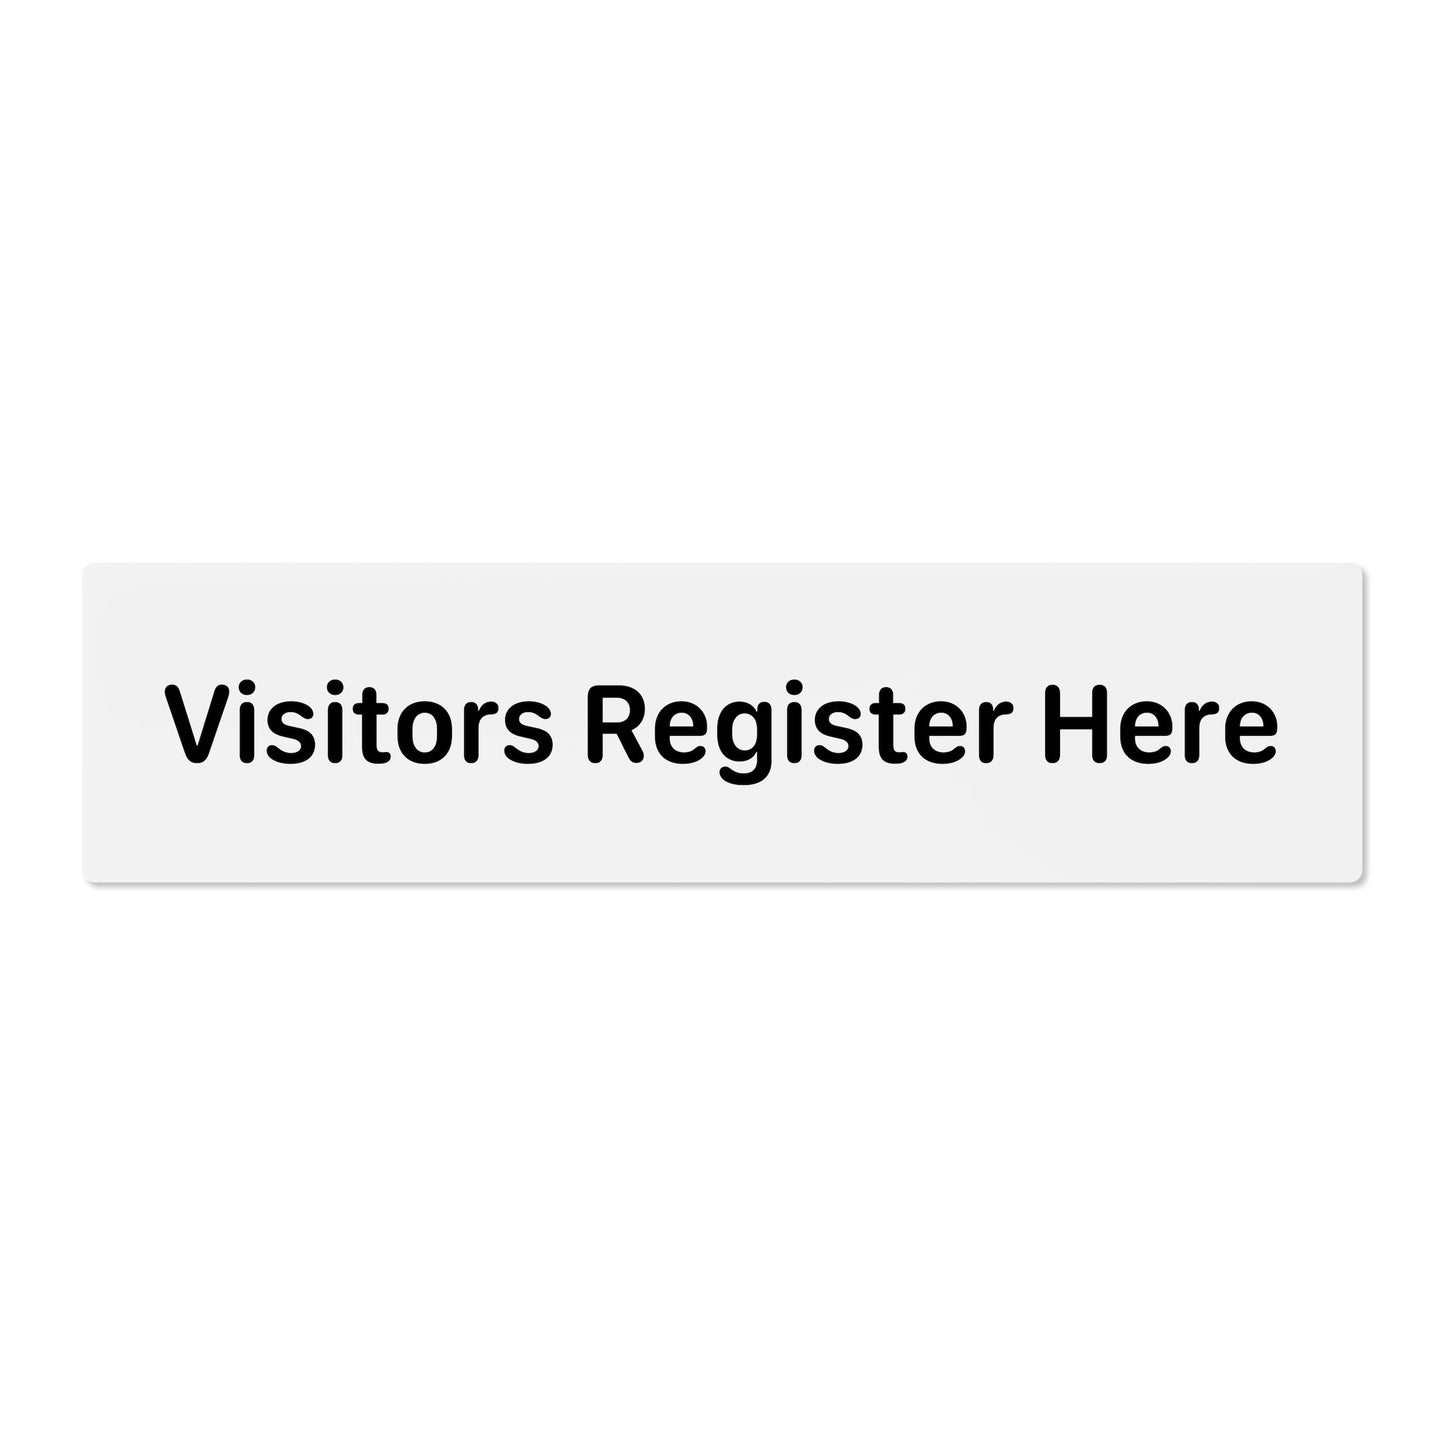 Visitors Register Here